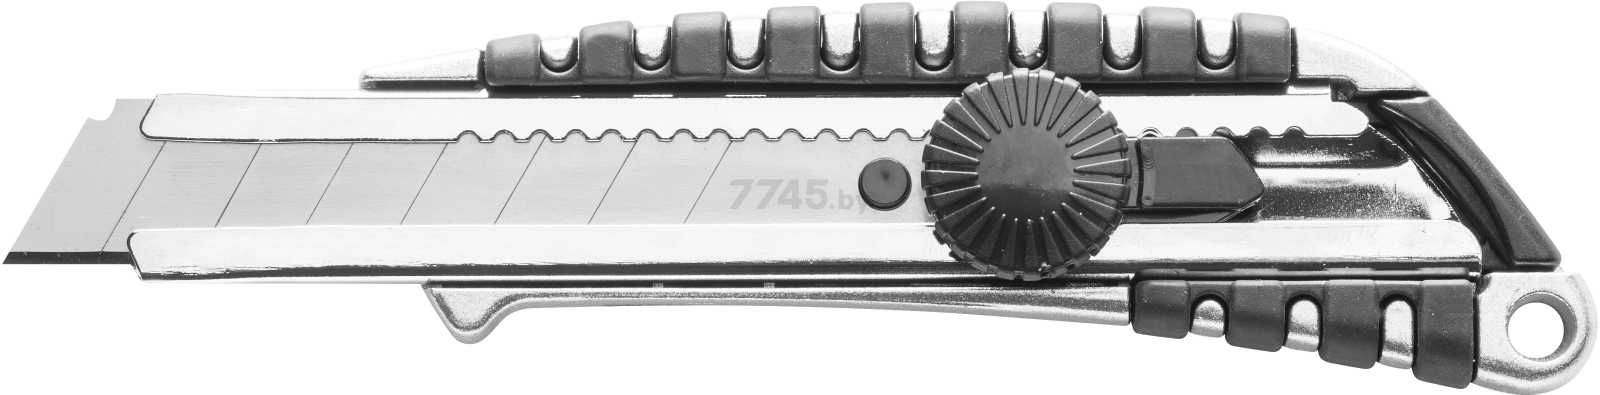 Нож канцелярский выдвижной 18 мм HARDY (0510-221800)